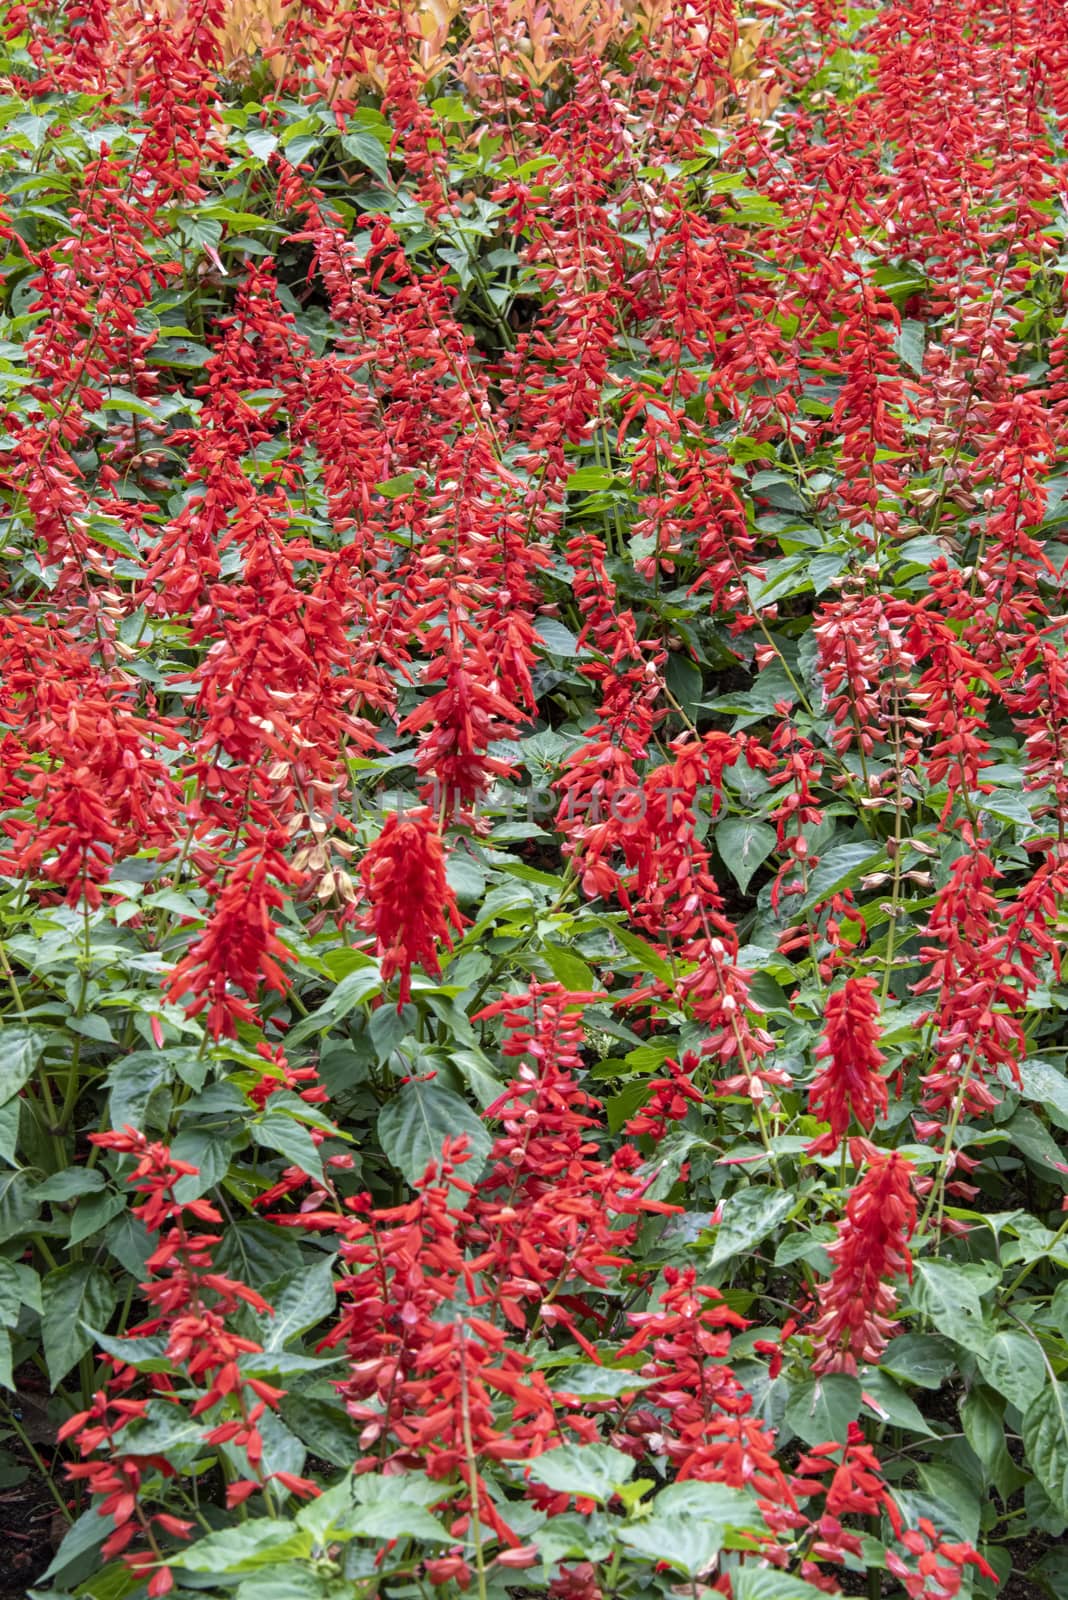 Sri Lanka, Botanical Garden - August 2015 - flower bed of bright red blooms